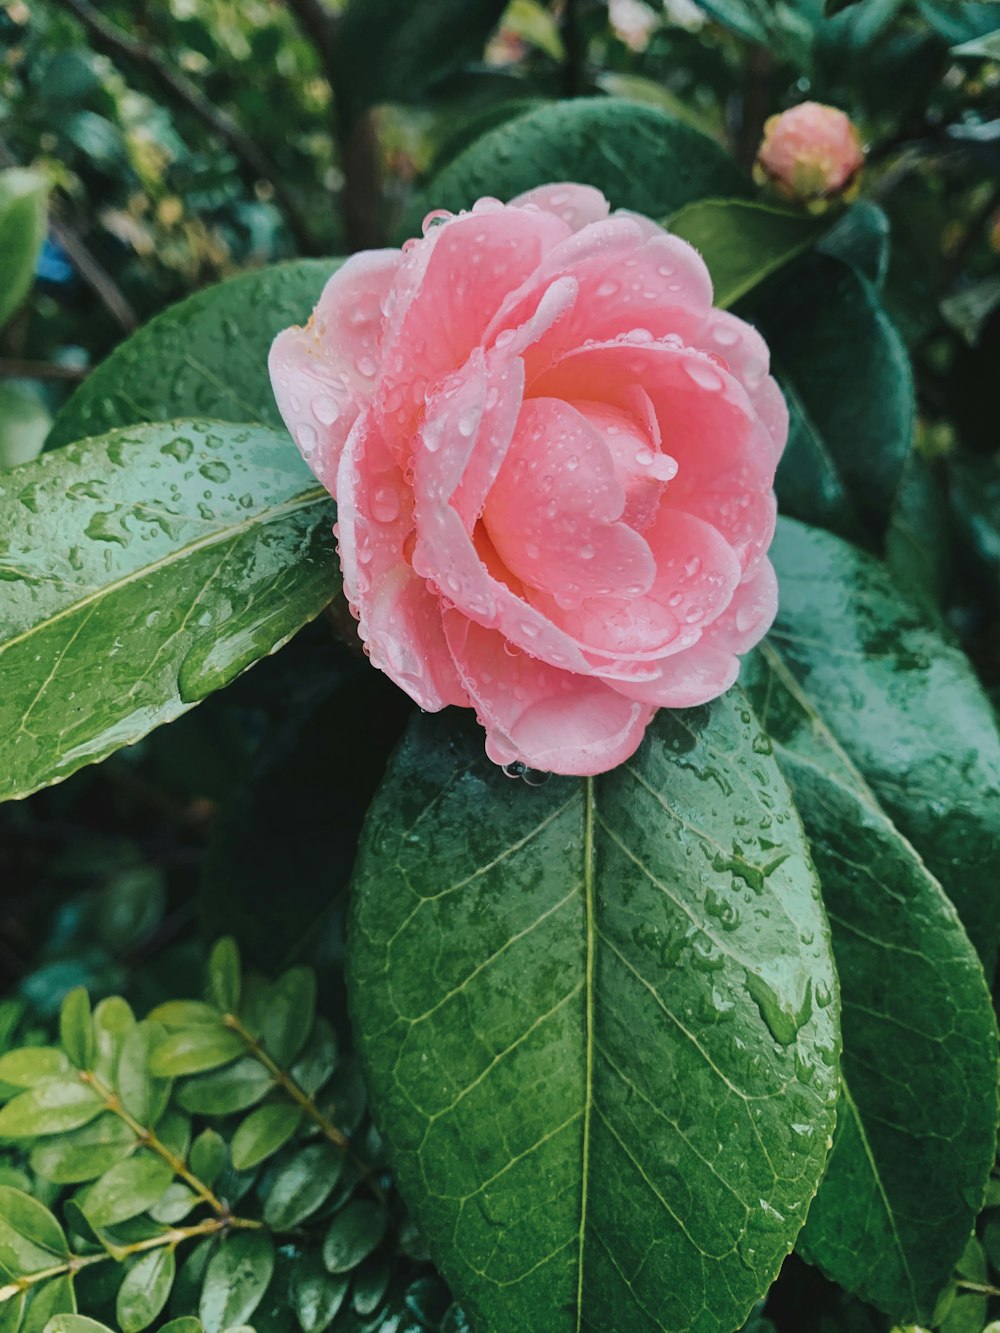 Rosa Blume in voller Blüte